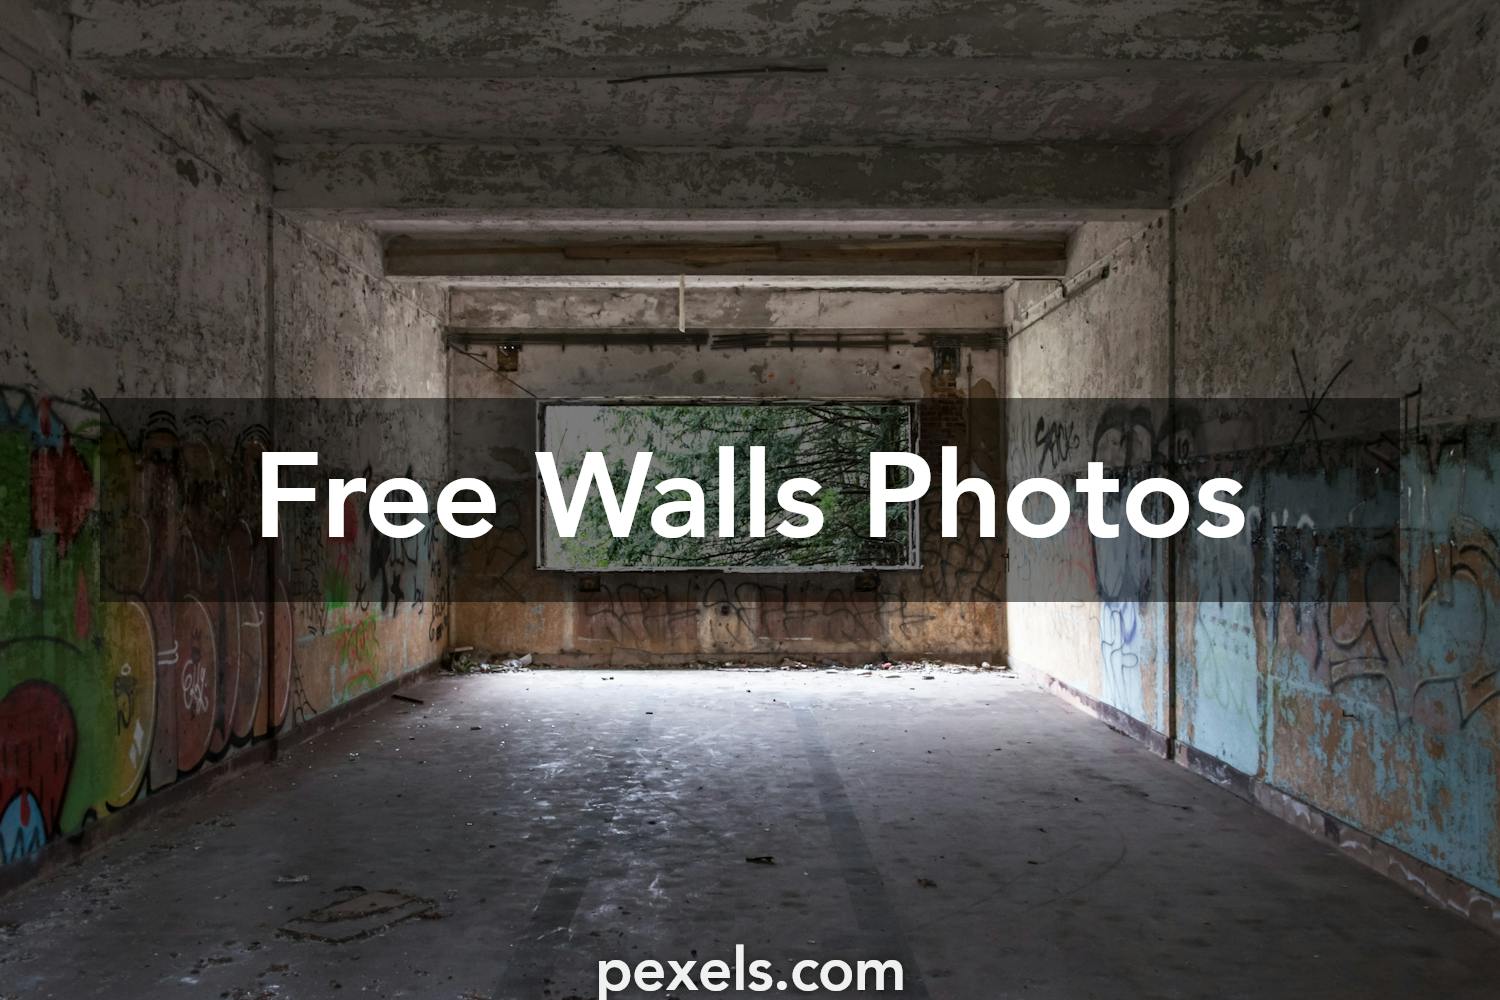 Free stock photos of walls · Pexels